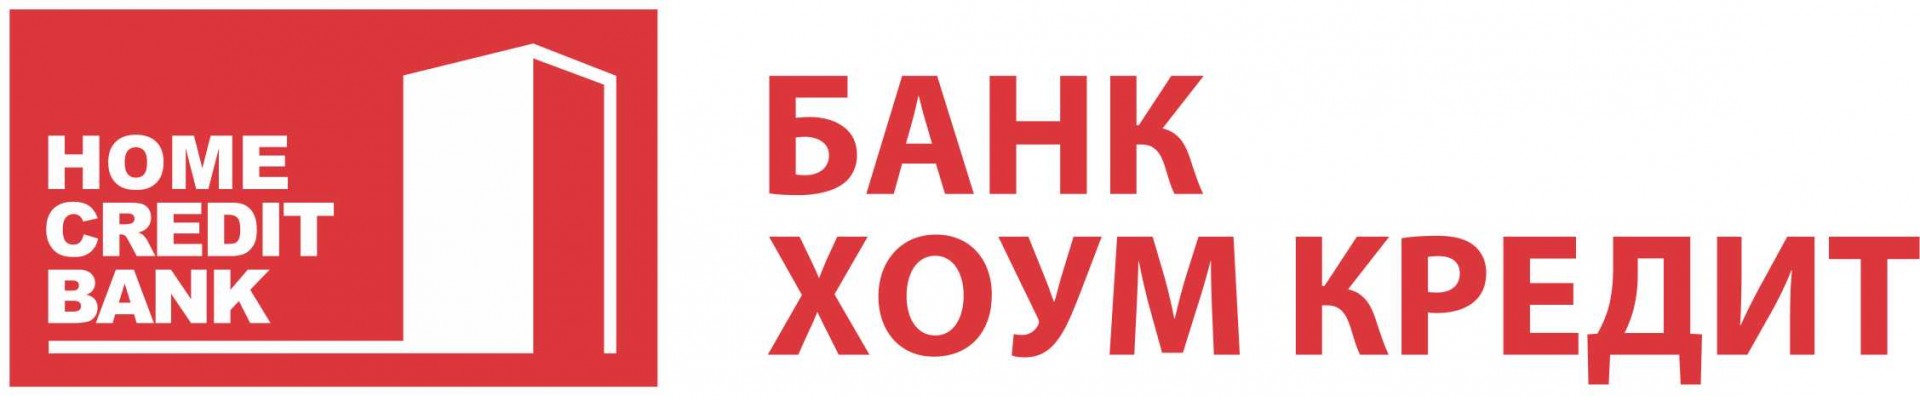 кредит хоум кредит банк банк ульяновск онлайн заявка